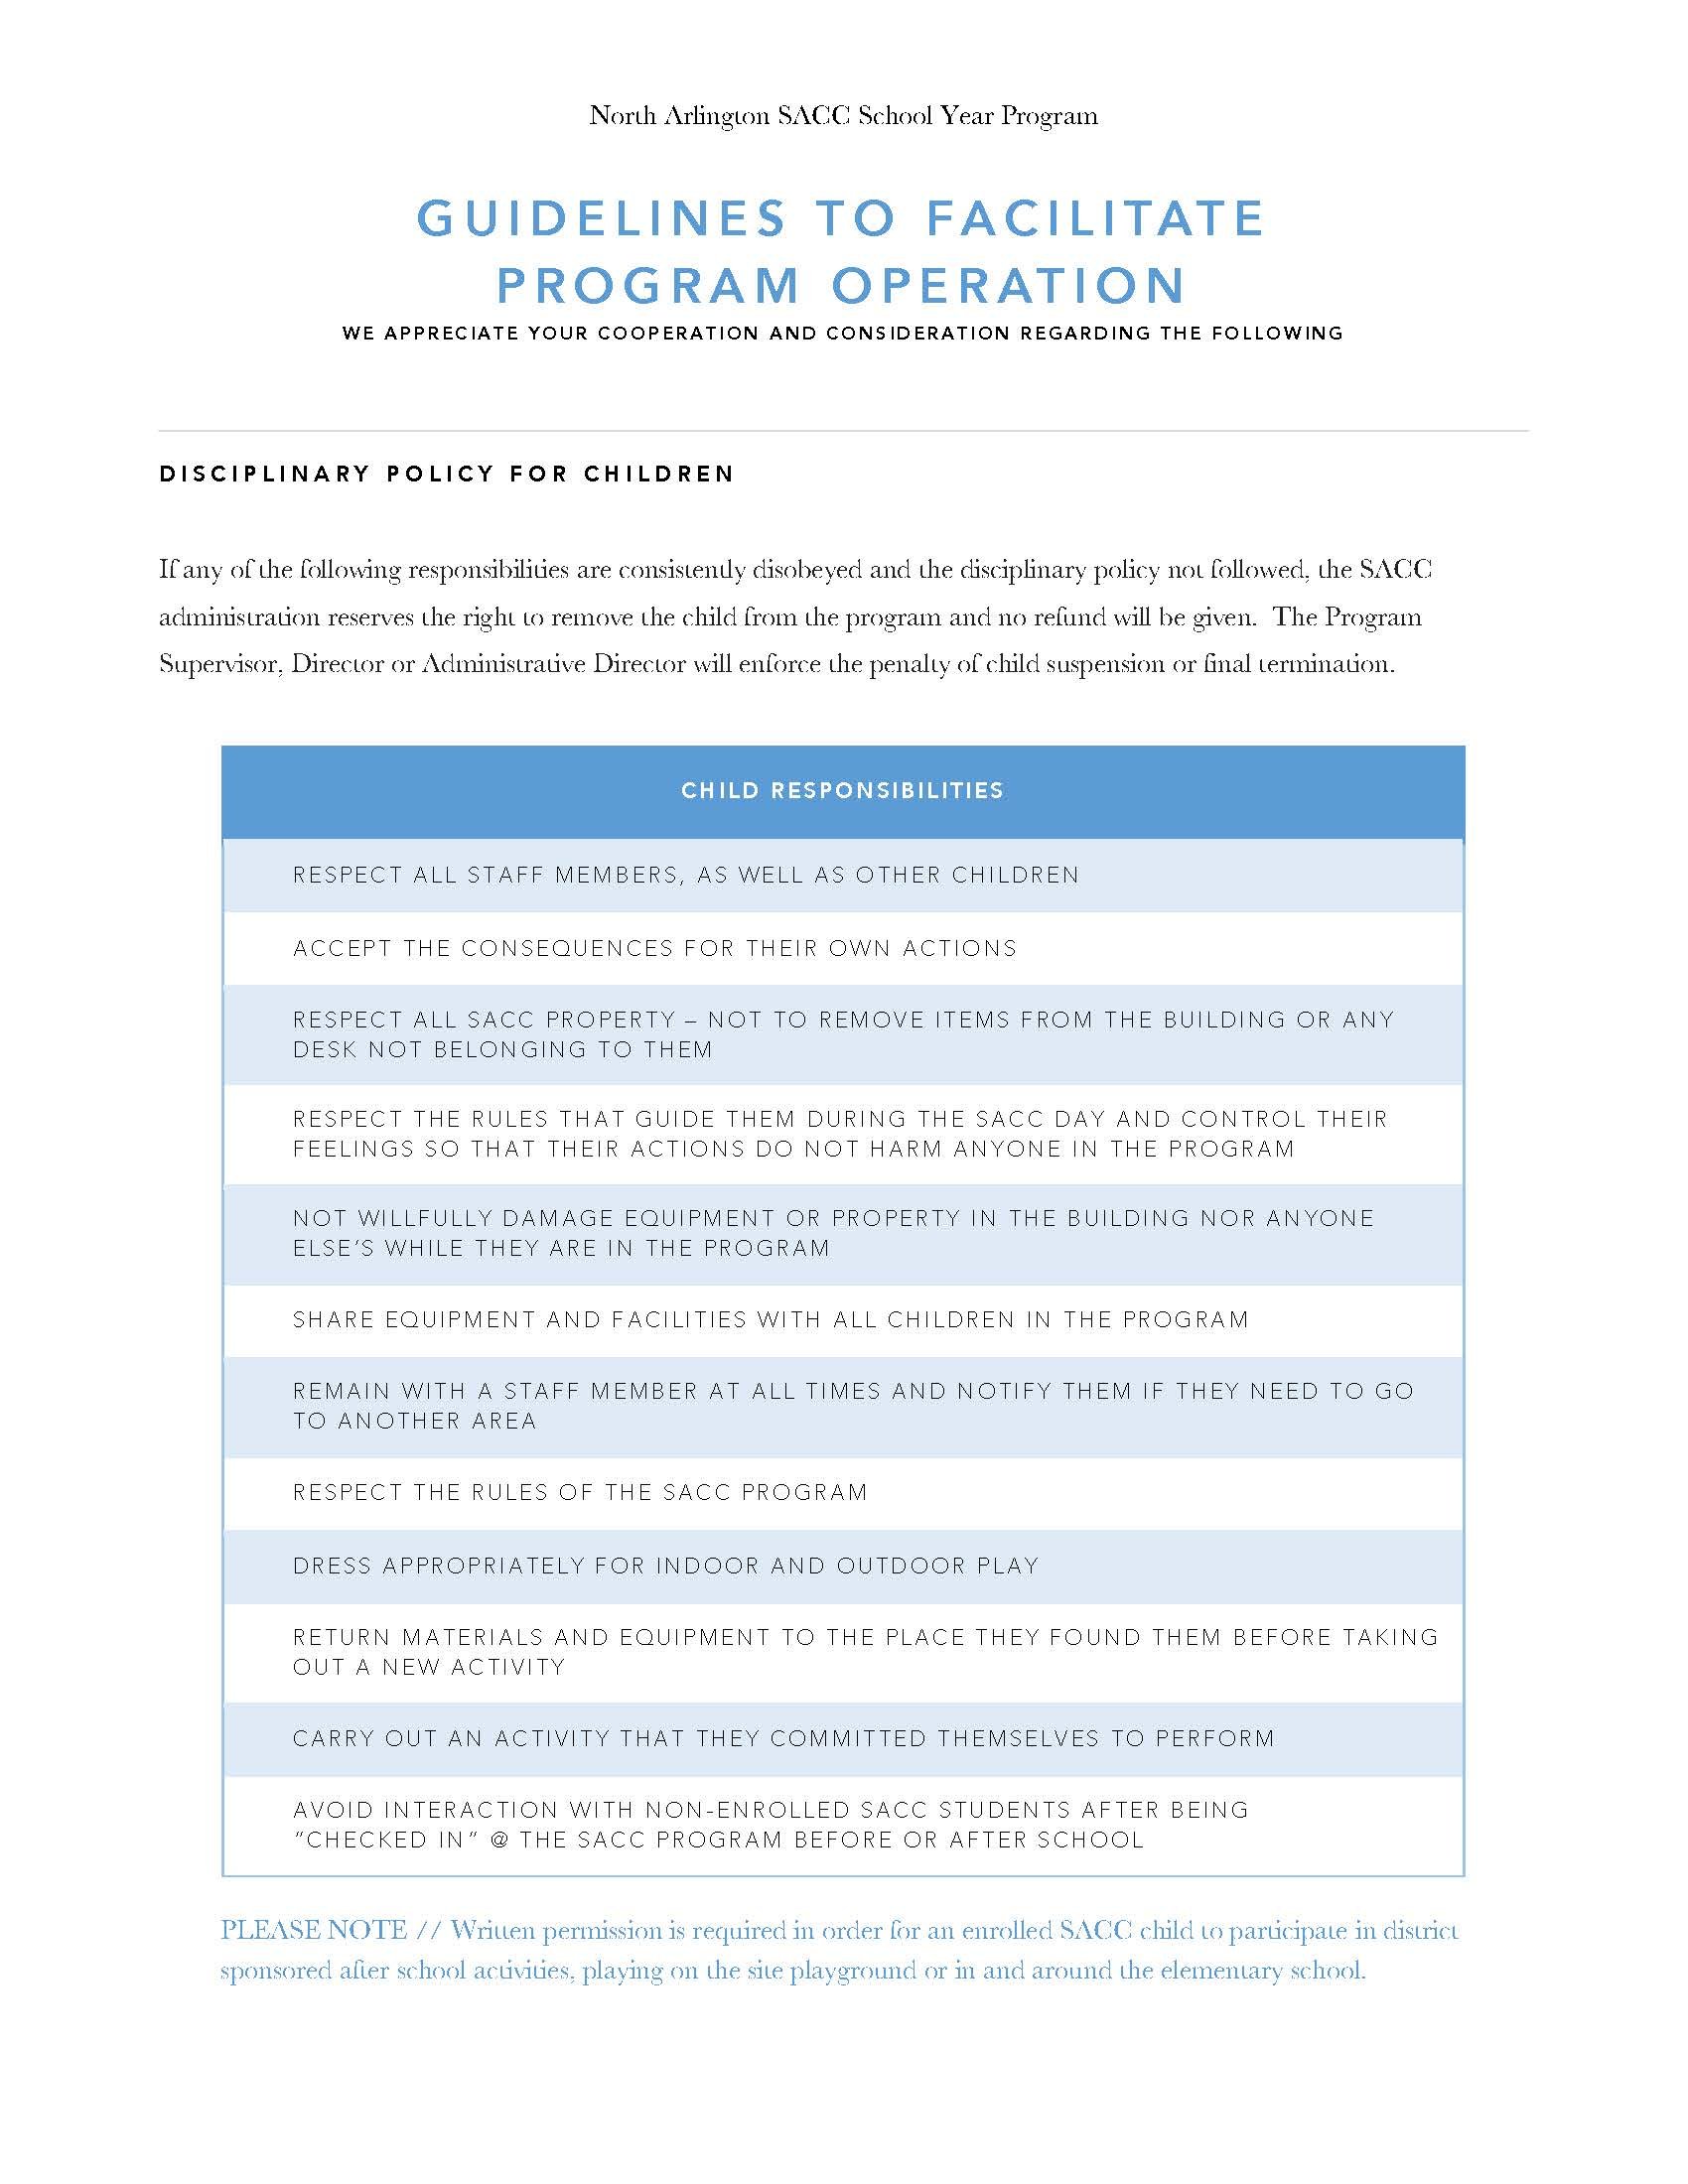 Guidelines to Facilitate Program Operation: Children 